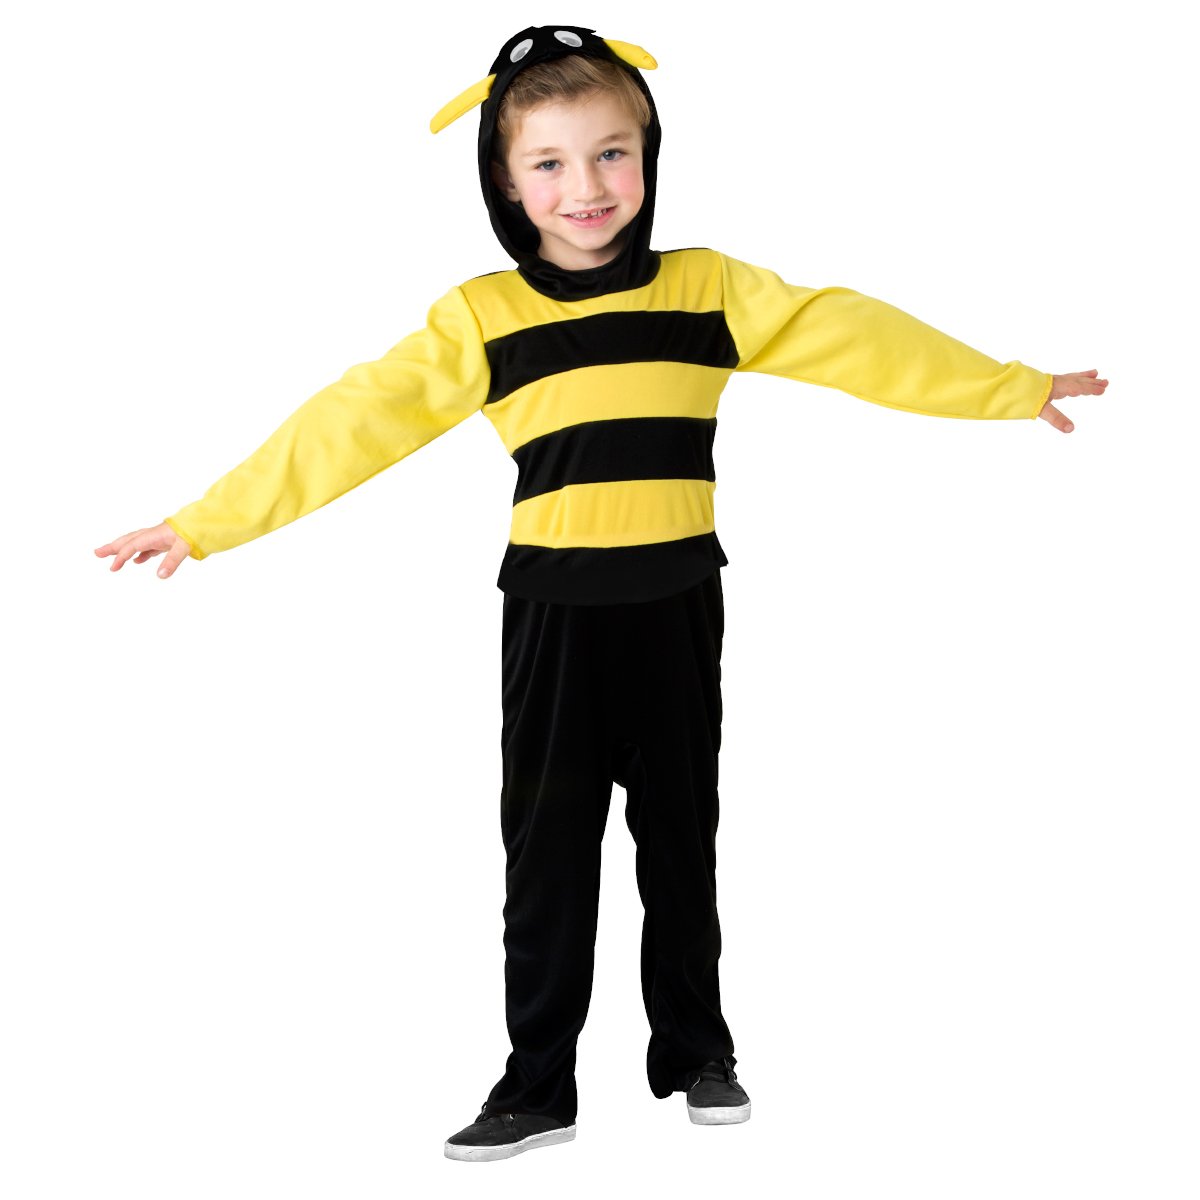 Rubies Costume Co - Medias de abejorro para niños pequeños